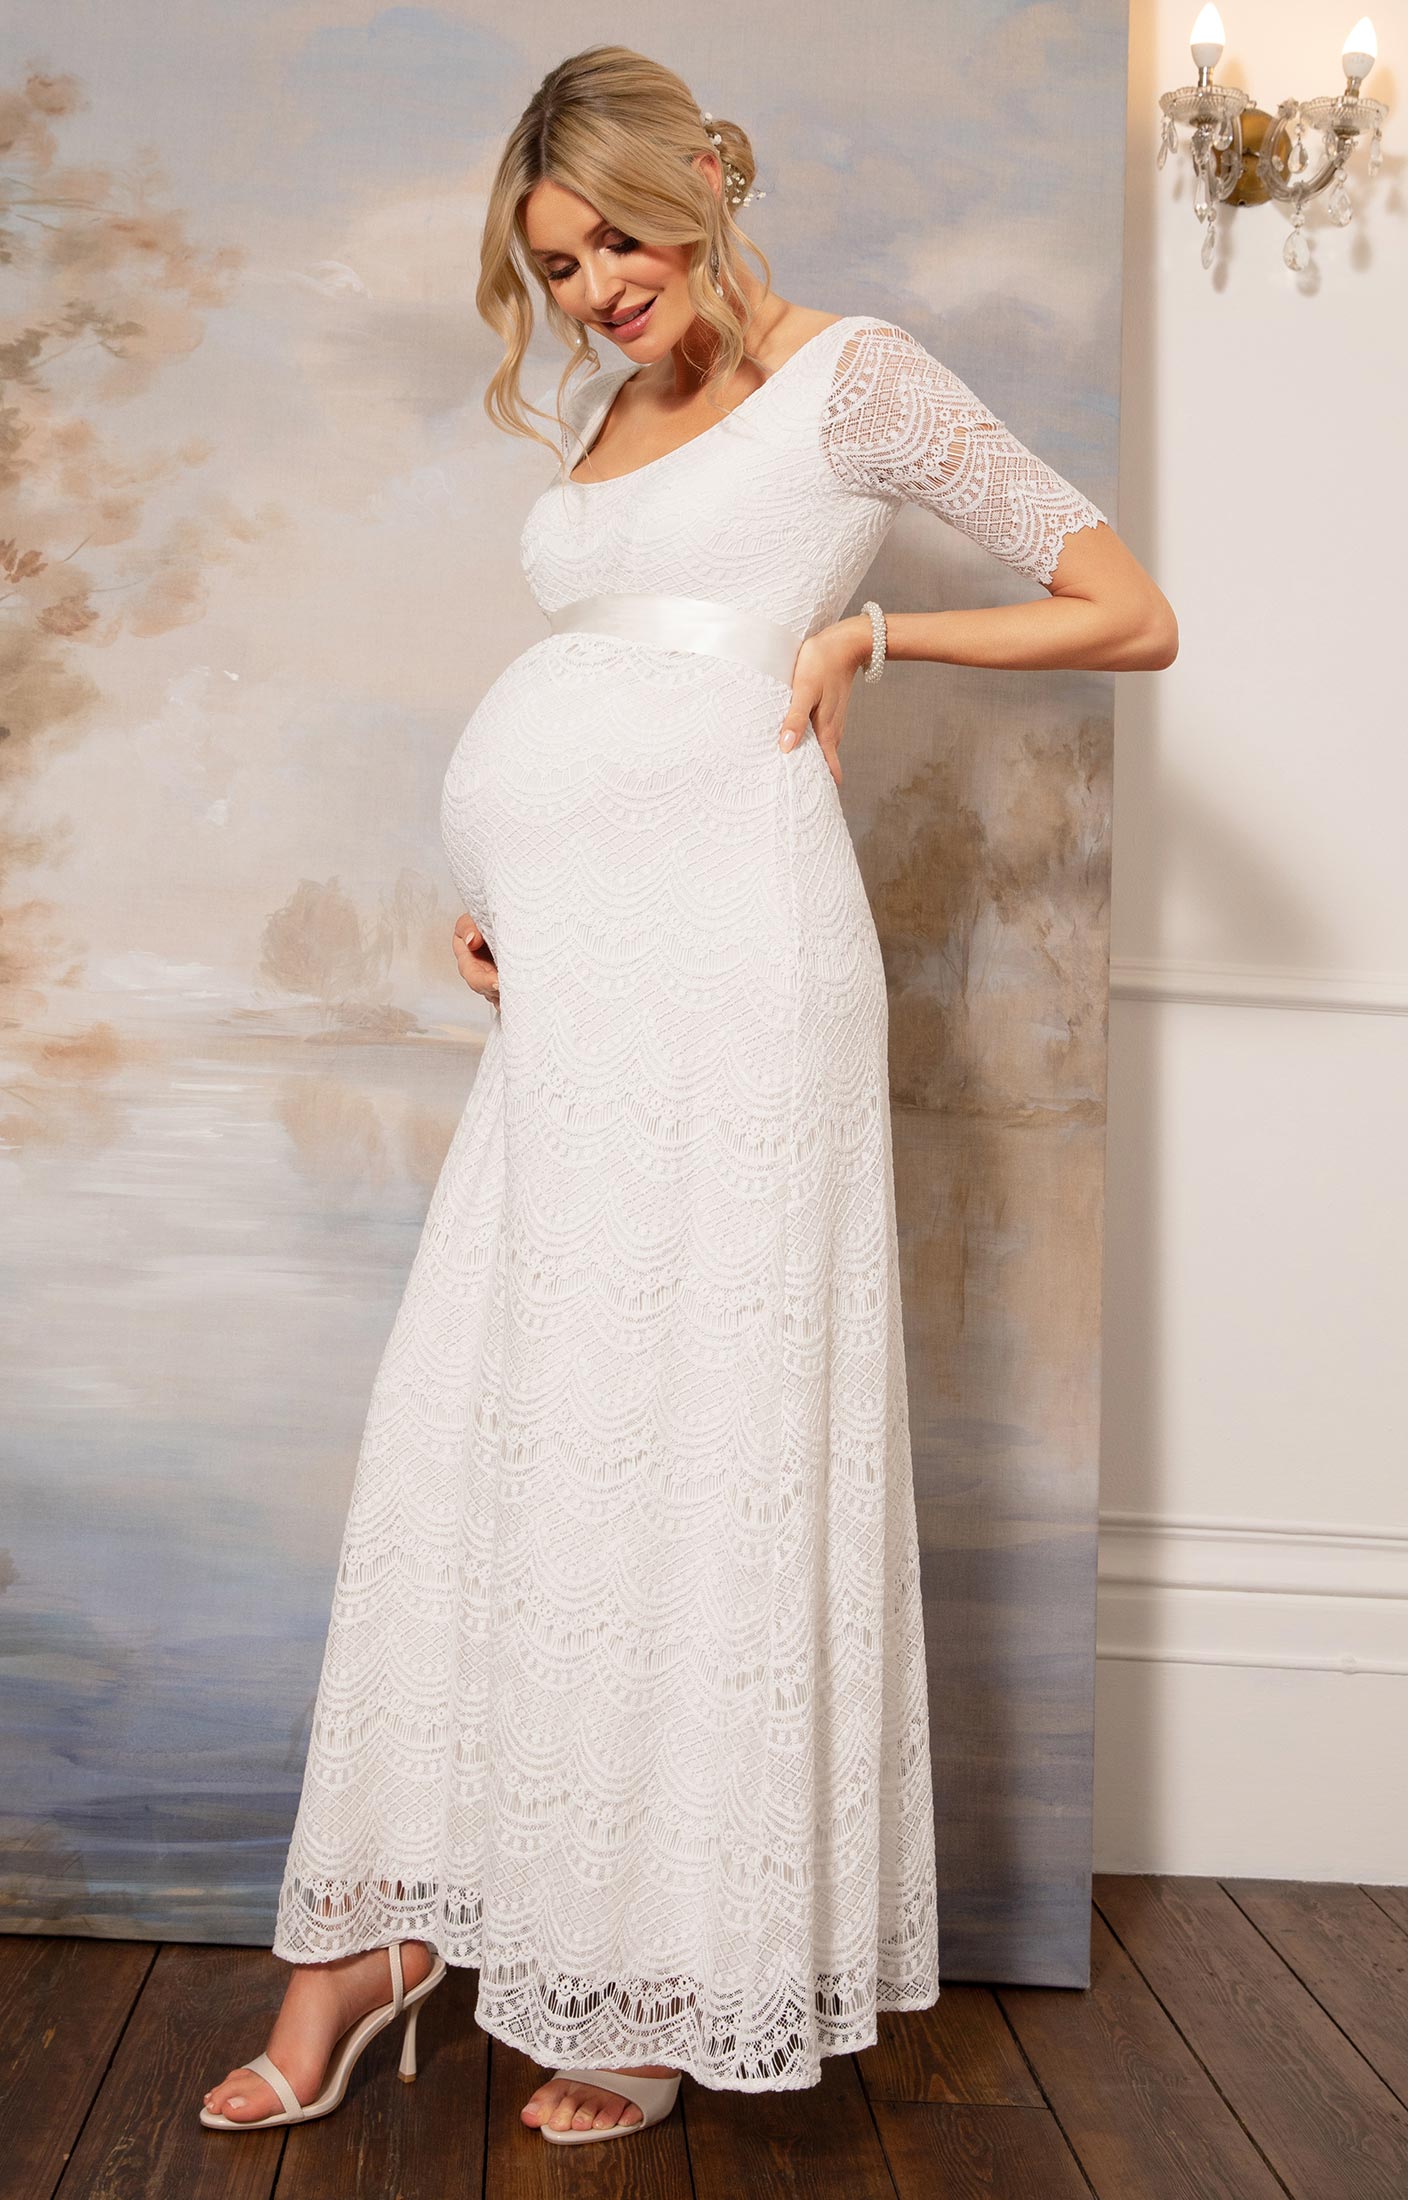 Buy Alies Double Lining - Three Layered Maternity/Nursing Bras